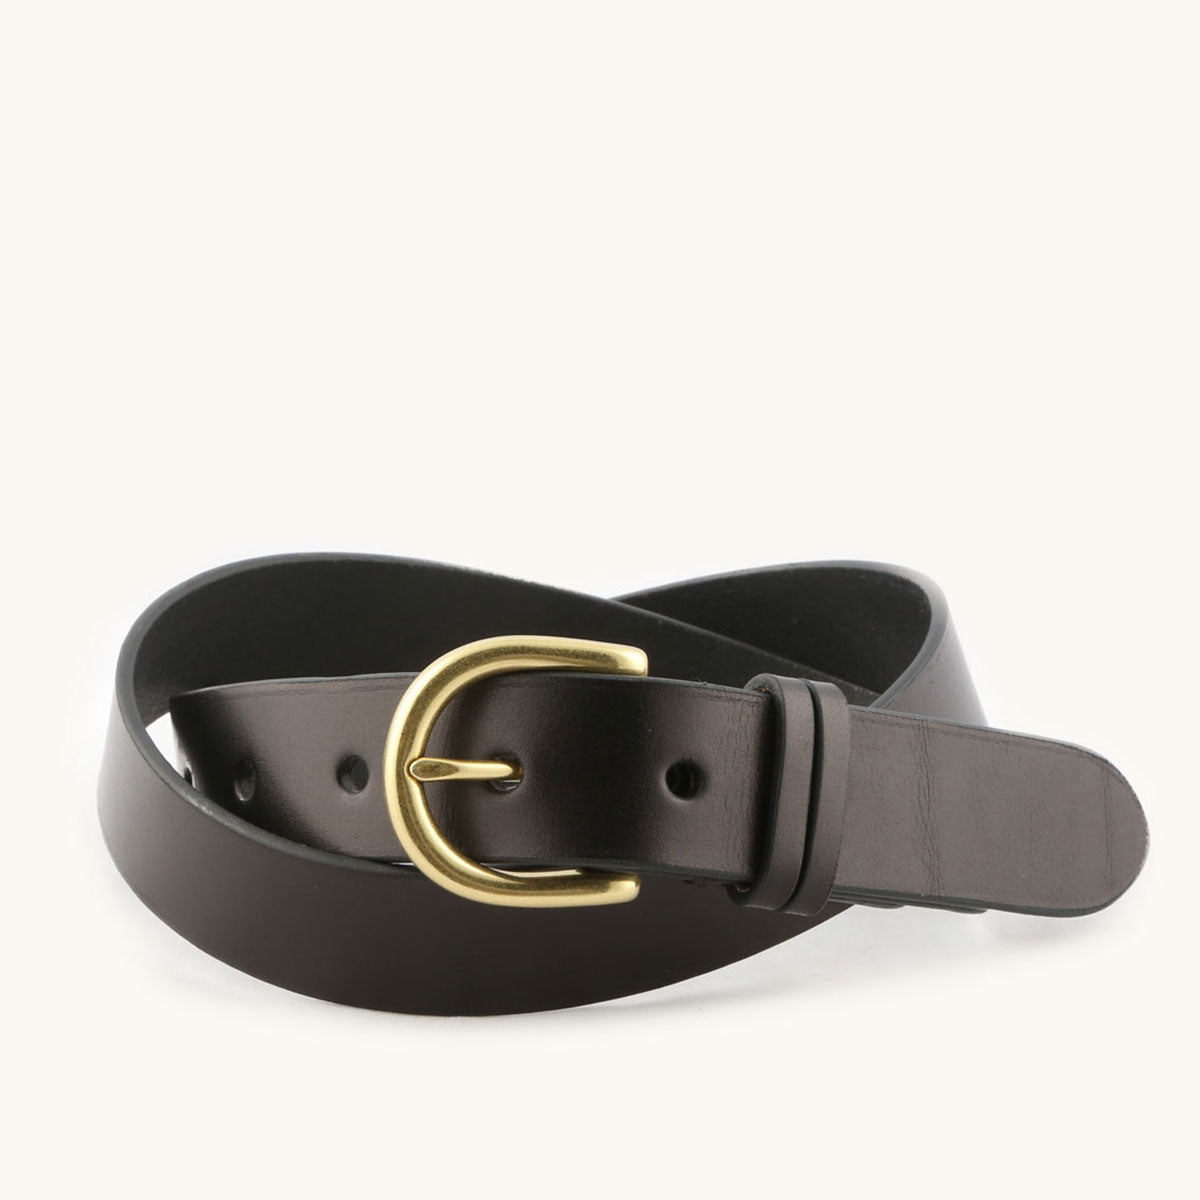  Tanner Goods Leather Meridian Belt - Black